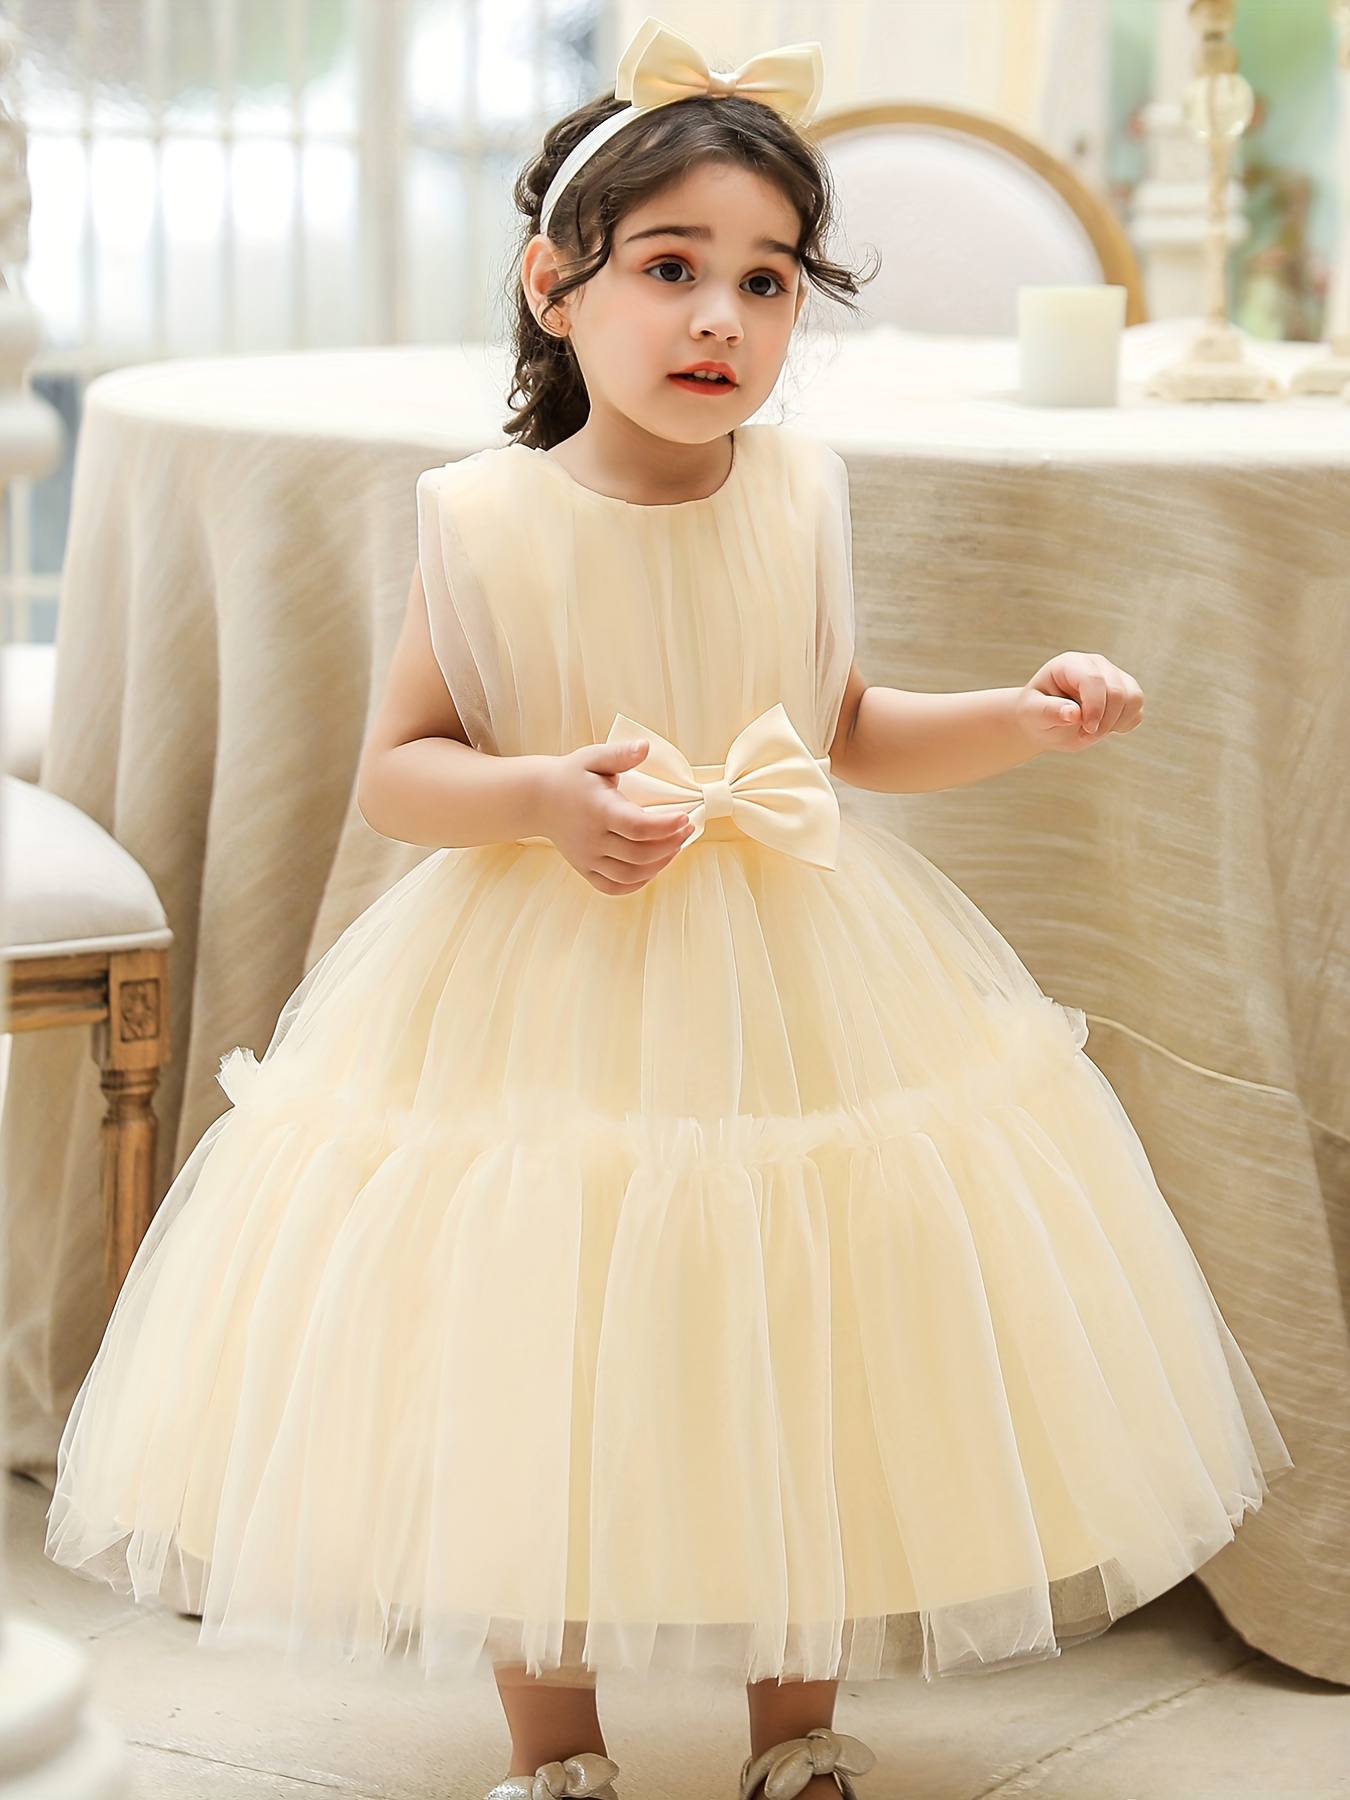 New Exquisite Children's Princess Dress! Cute Sleeveless Bow